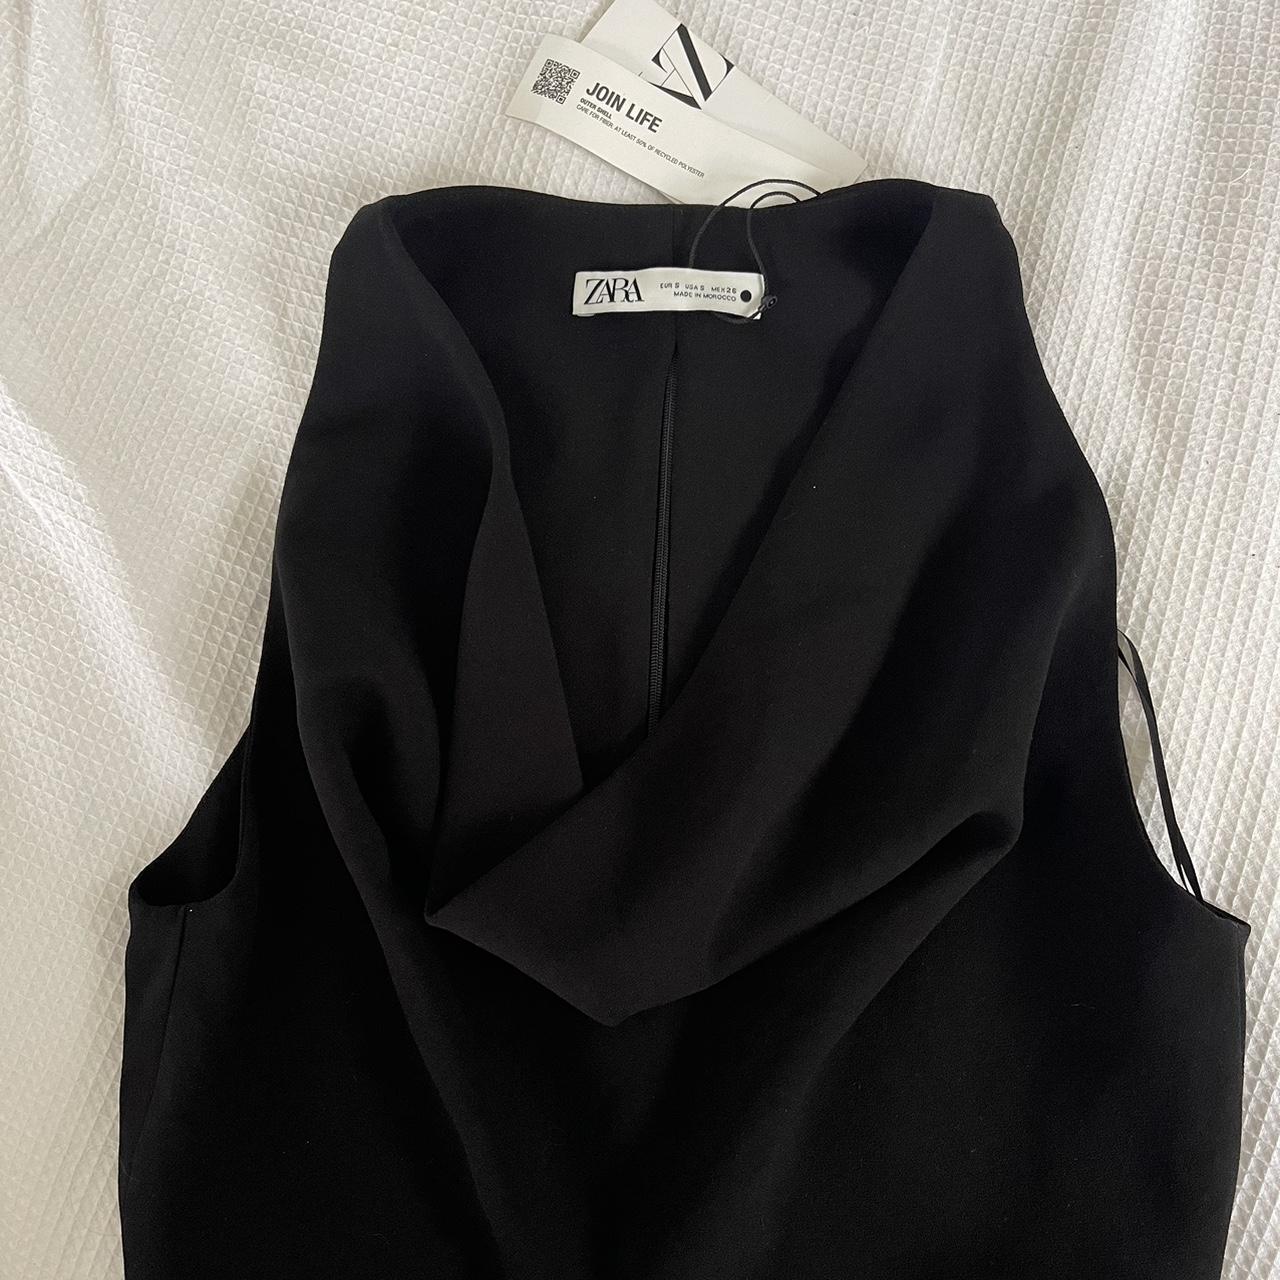 Zara black top cowl neck 🖤 Originally $65.95,... - Depop